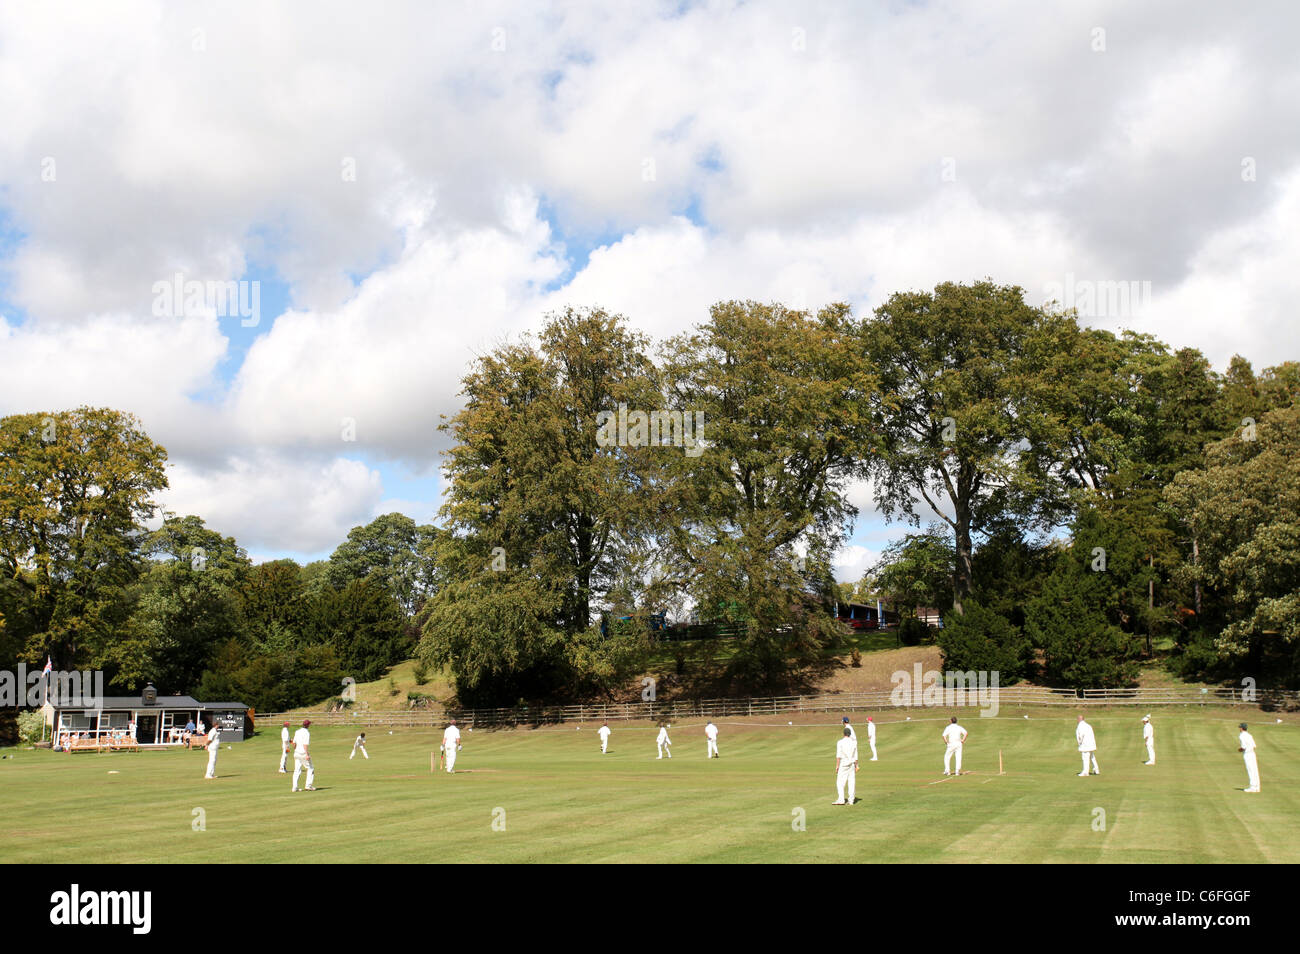 A Village Cricket Match in Derbyshire Stock Photo